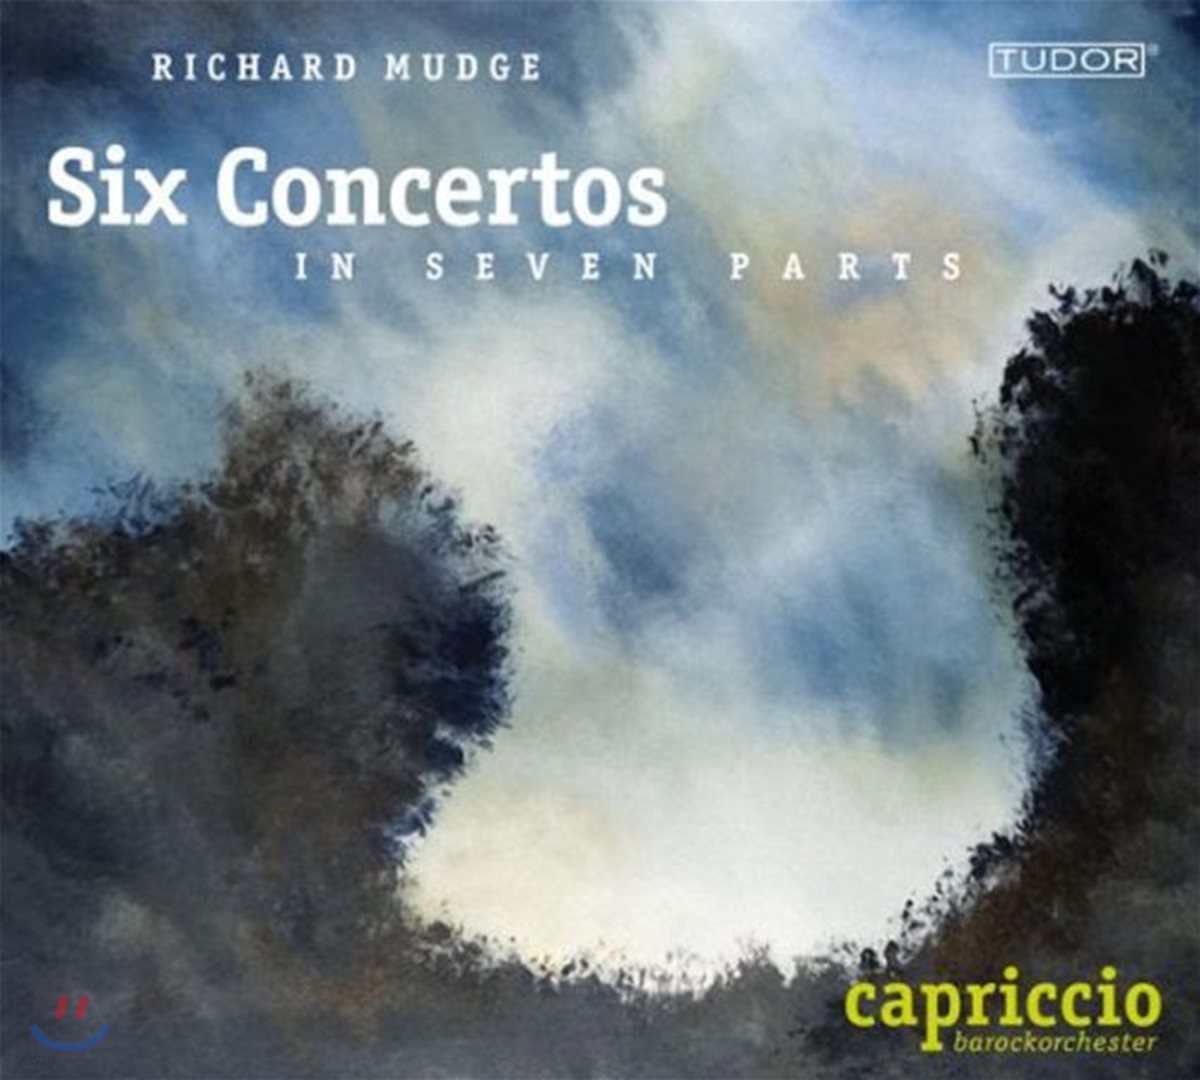 Capriccio Barockorchester 리차드 머지: 여섯 개의 협주곡, &#39;논 노비스, 도미네&#39; (Richard Mudge: Six Concertos, &#39;Non Nobis, Domine&#39;)